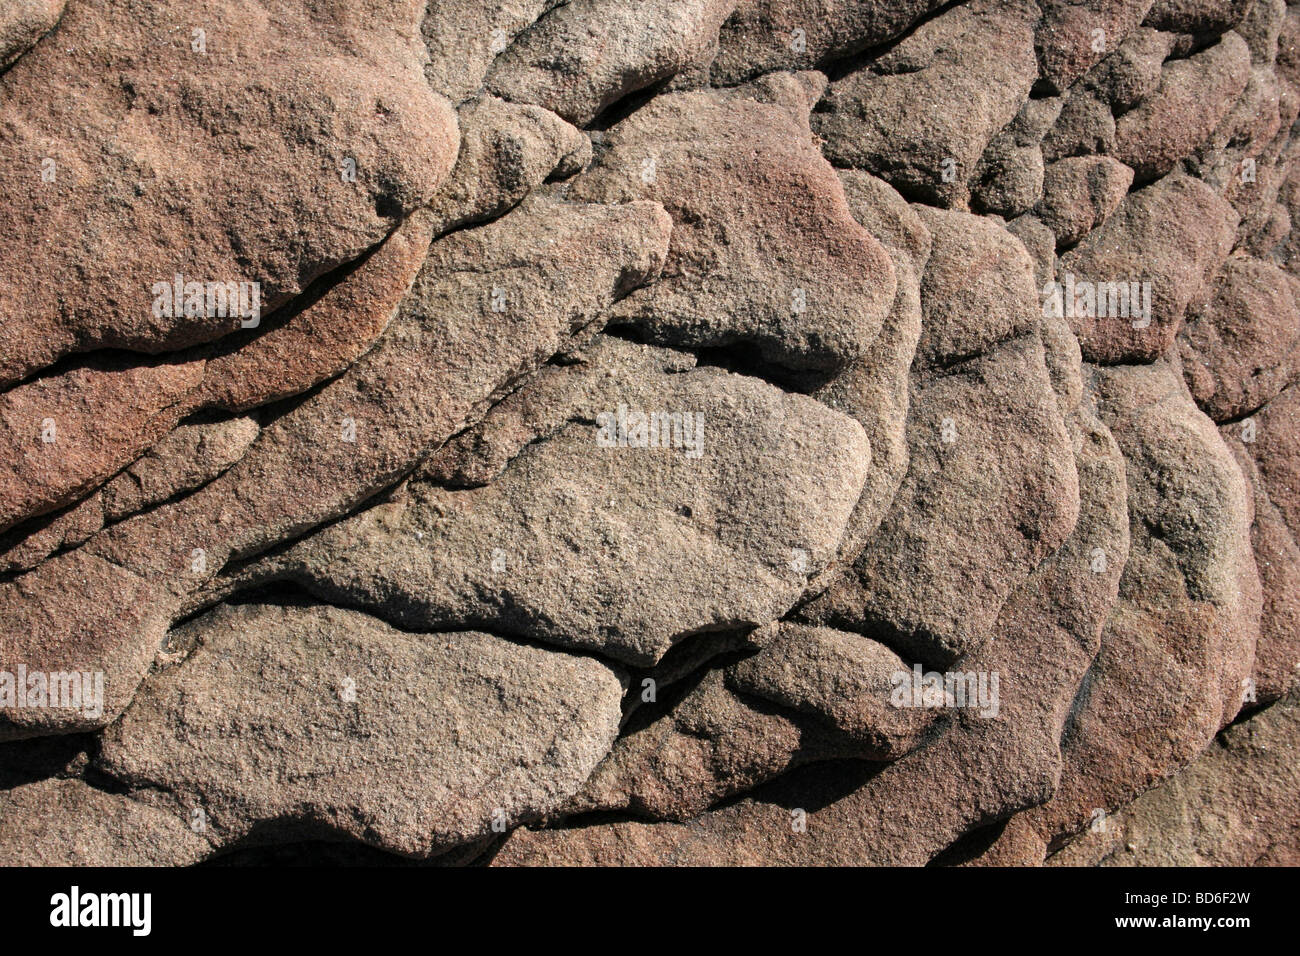 Rock Strata In Bunter Sandstone, Hilbre Island, Wirral, Merseyside, UK Stock Photo